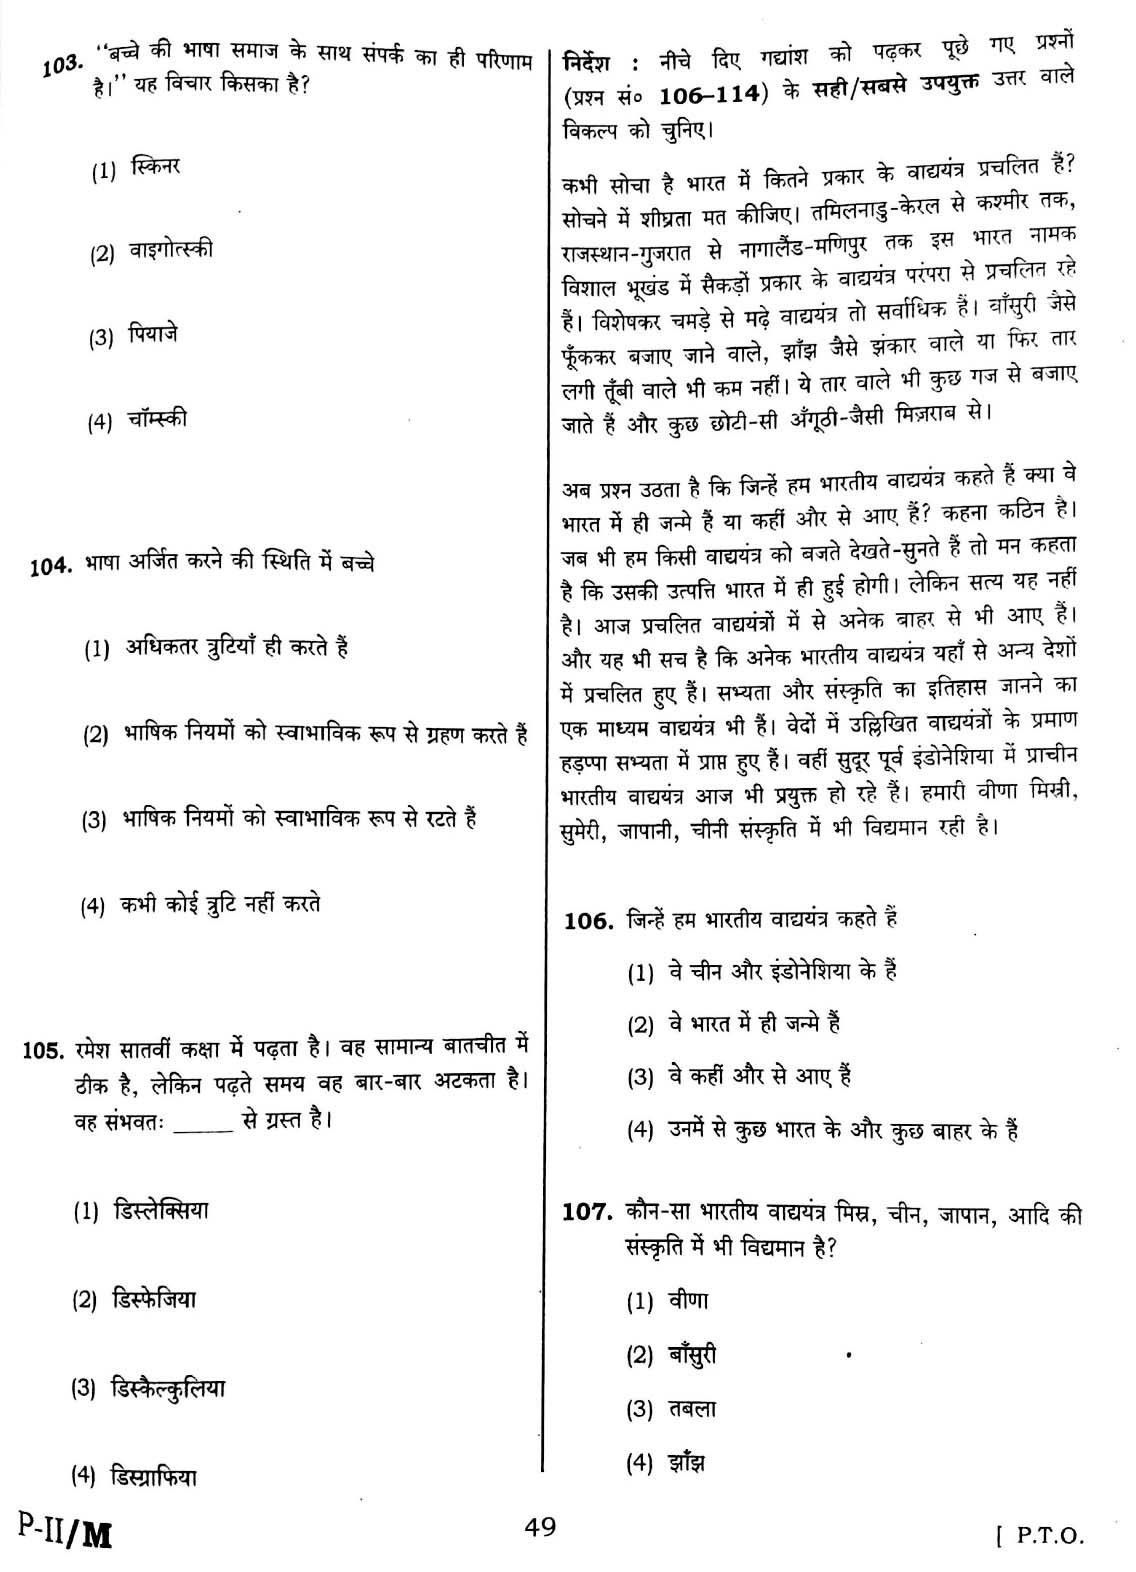 CTET February 2016 Paper 2 Part IV Language 1 Hindi 3